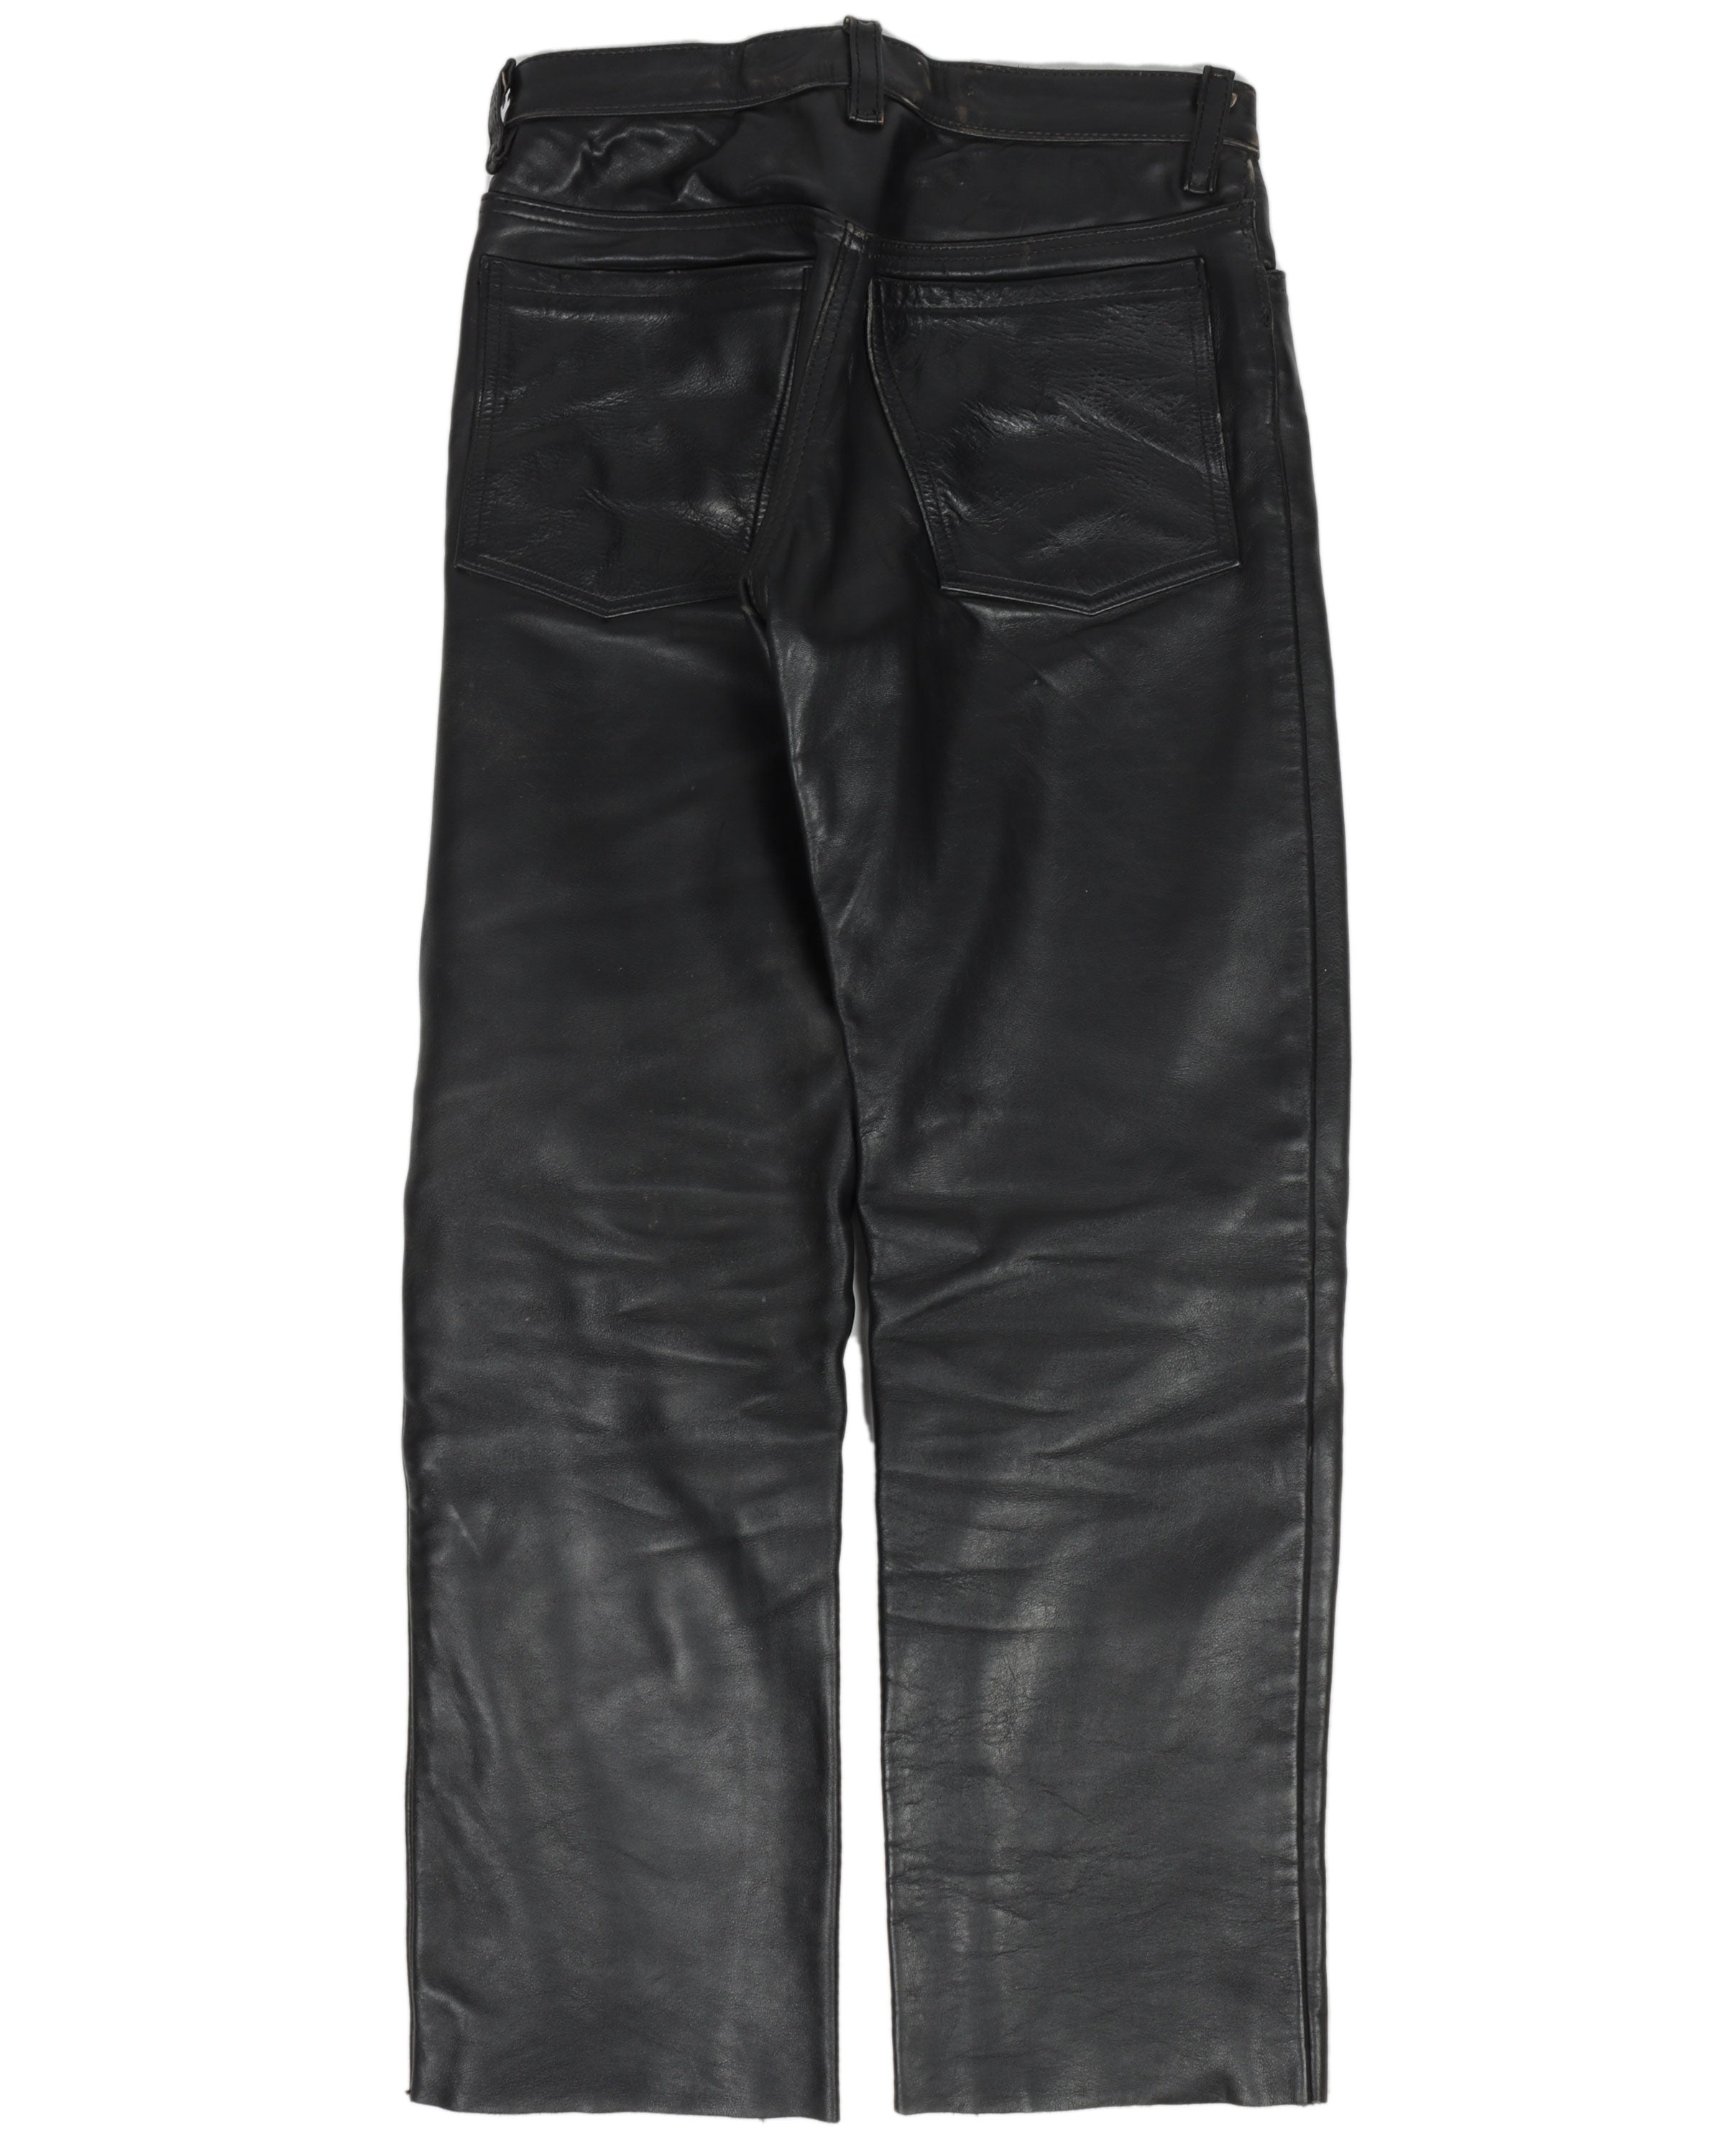 Vanson Leathers Leather Pants